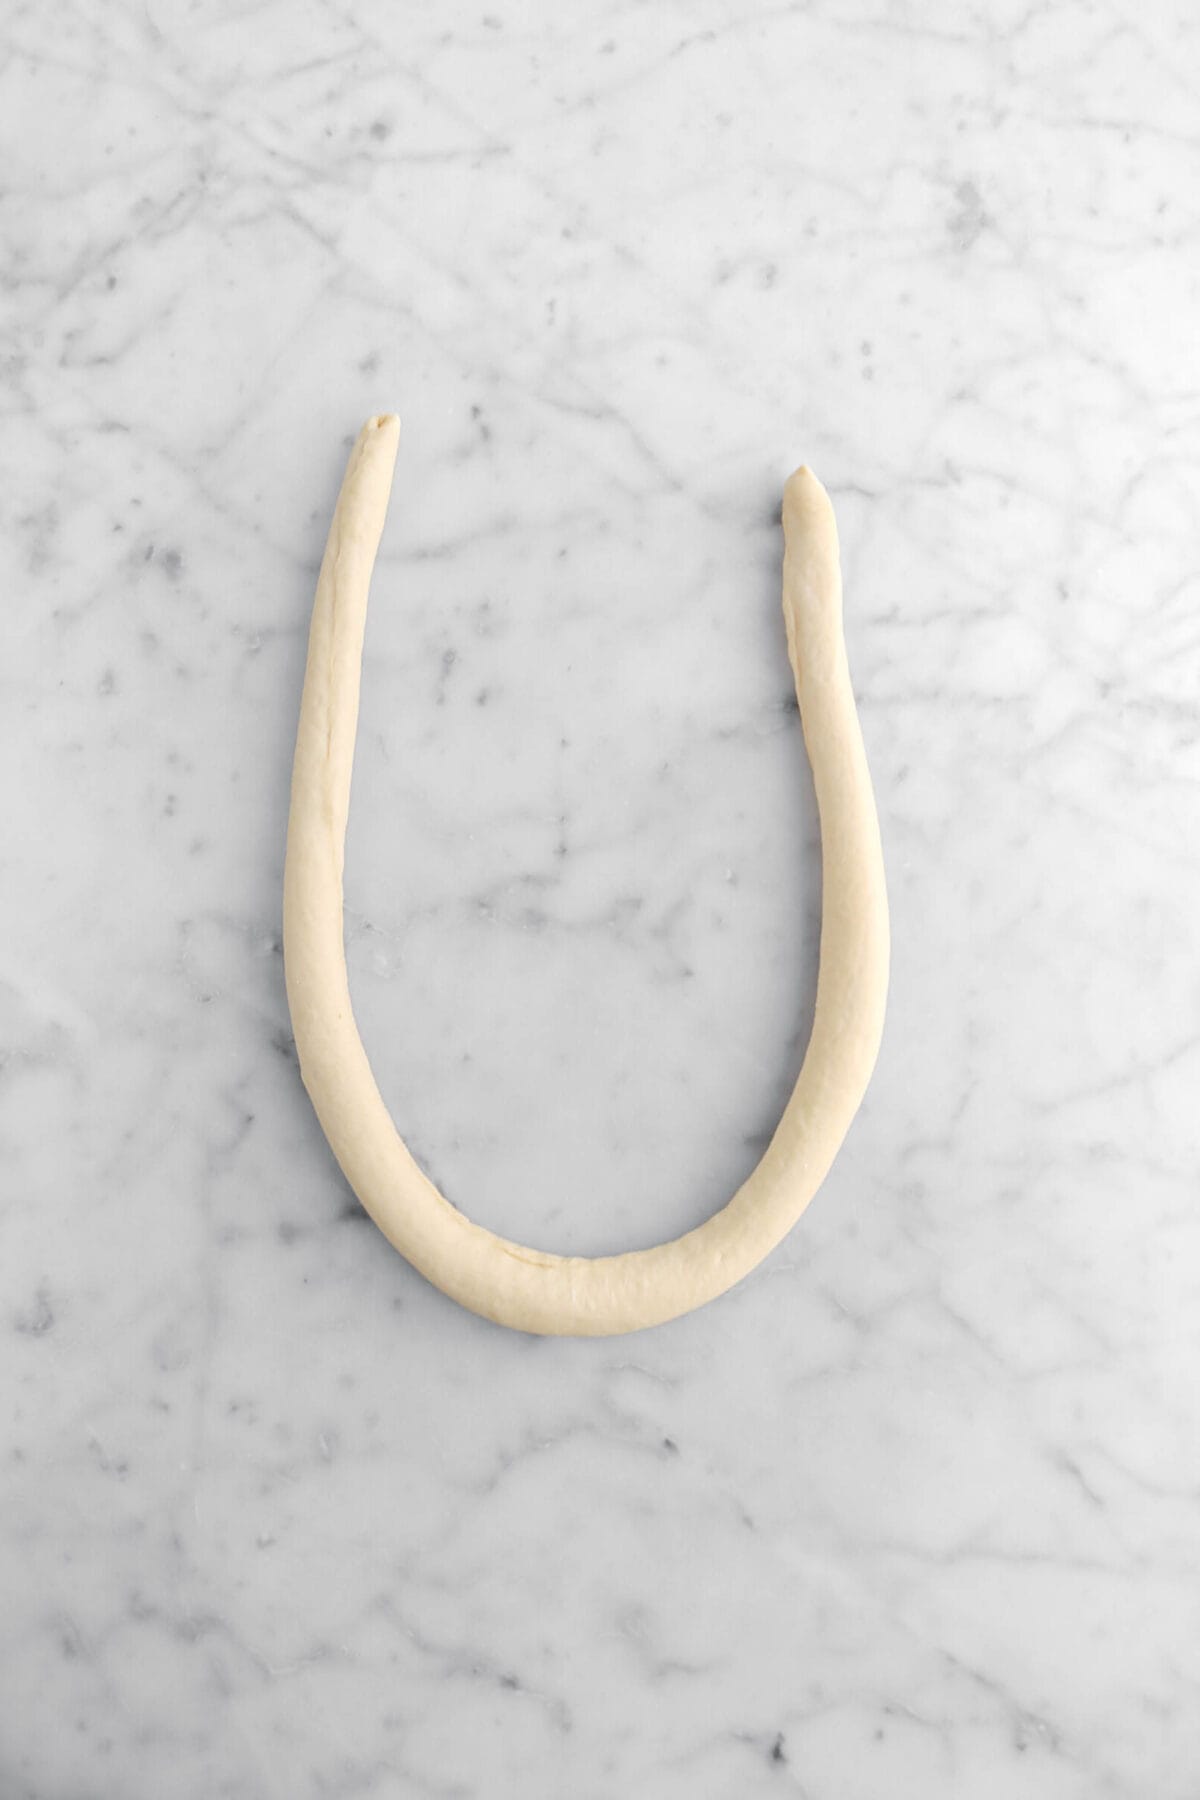 dough rope shaped in a, "U" shape.